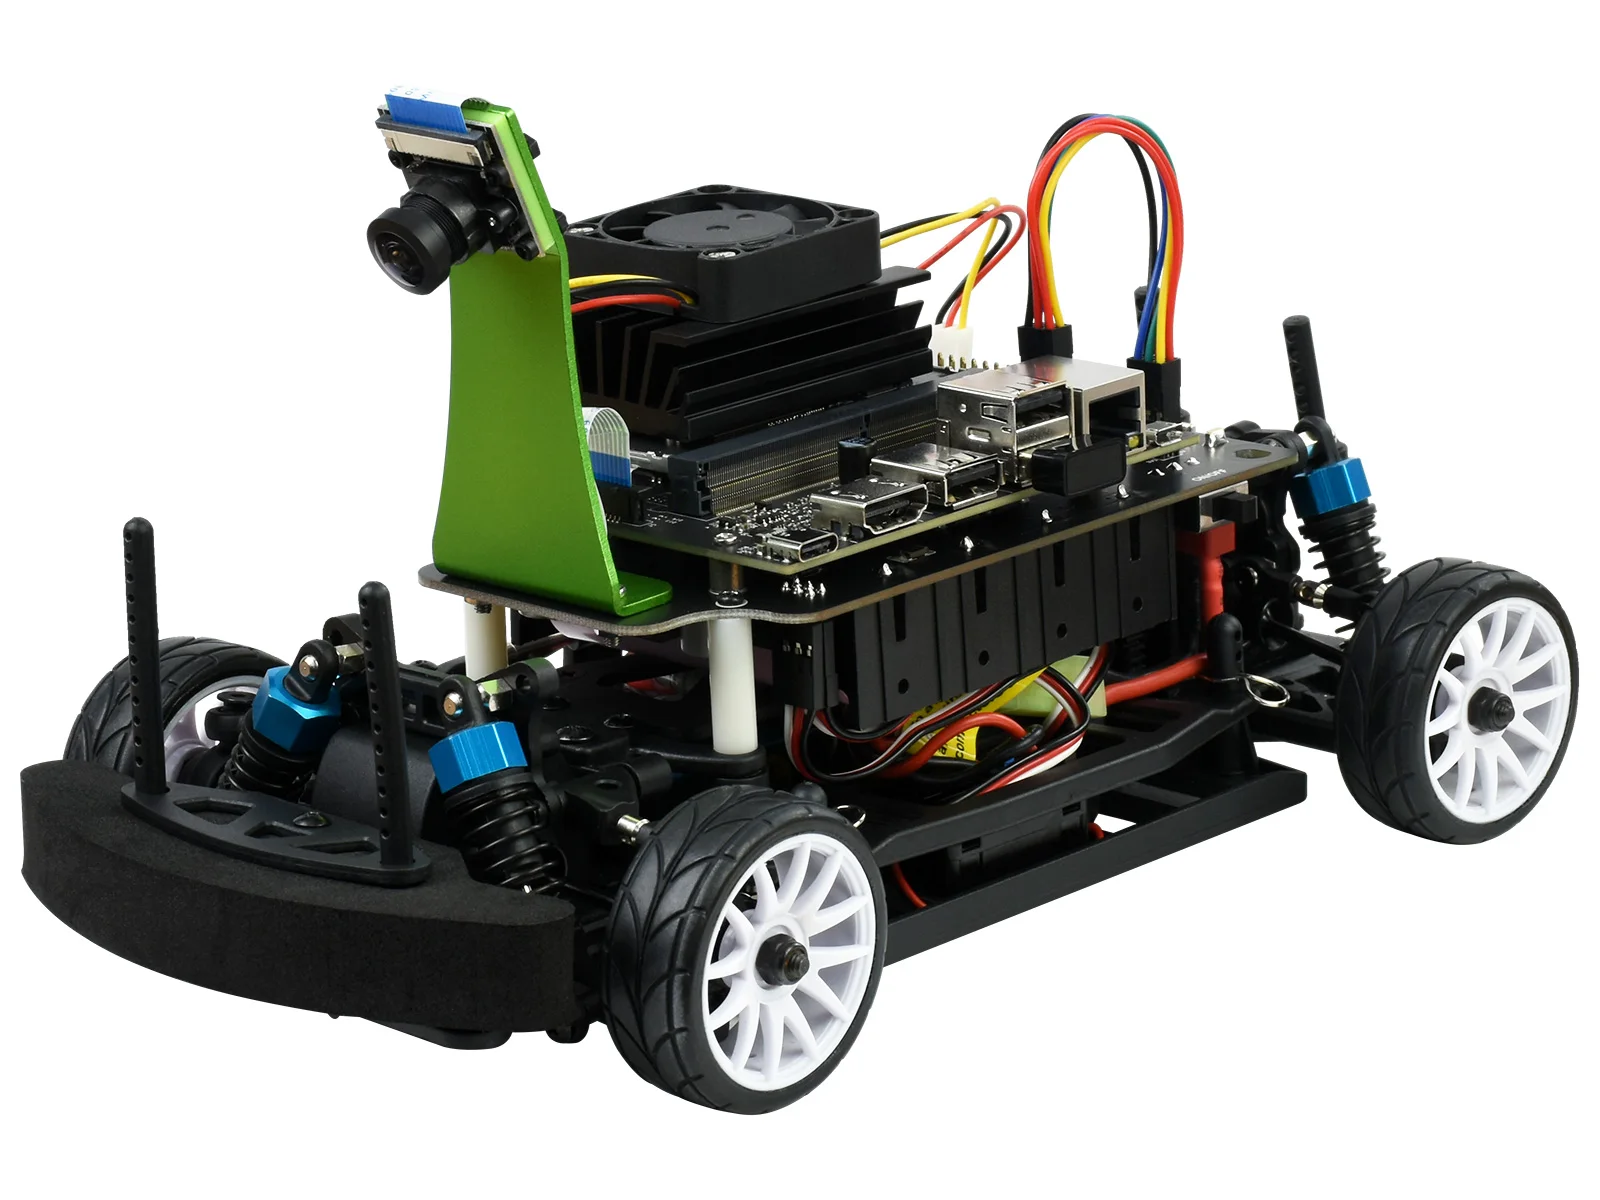 

Waveshare JetRacer Pro 2GB AI Kit, High Speed AI Racing Robot Powered by Jetson Nano 2GB, Pro Version